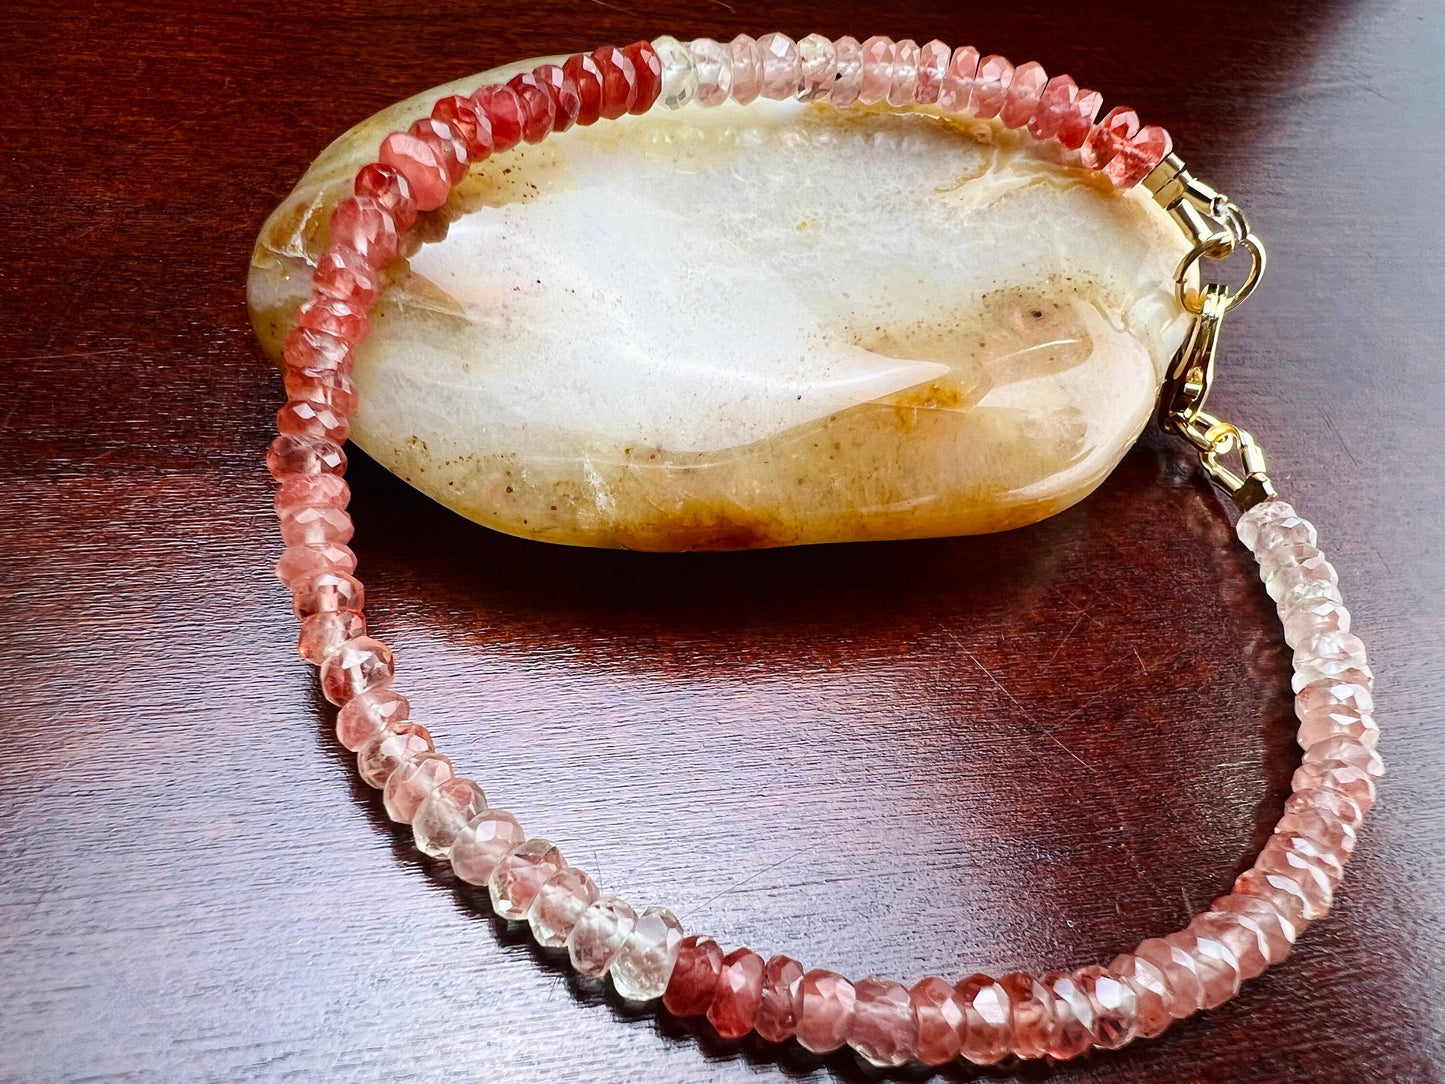 Andesine red labradorite 3.5-4mm shaded Faceted Rondelle bracelet in 14k Gold Filled or 925 Sterling Silver, energy chakra Yoga gift